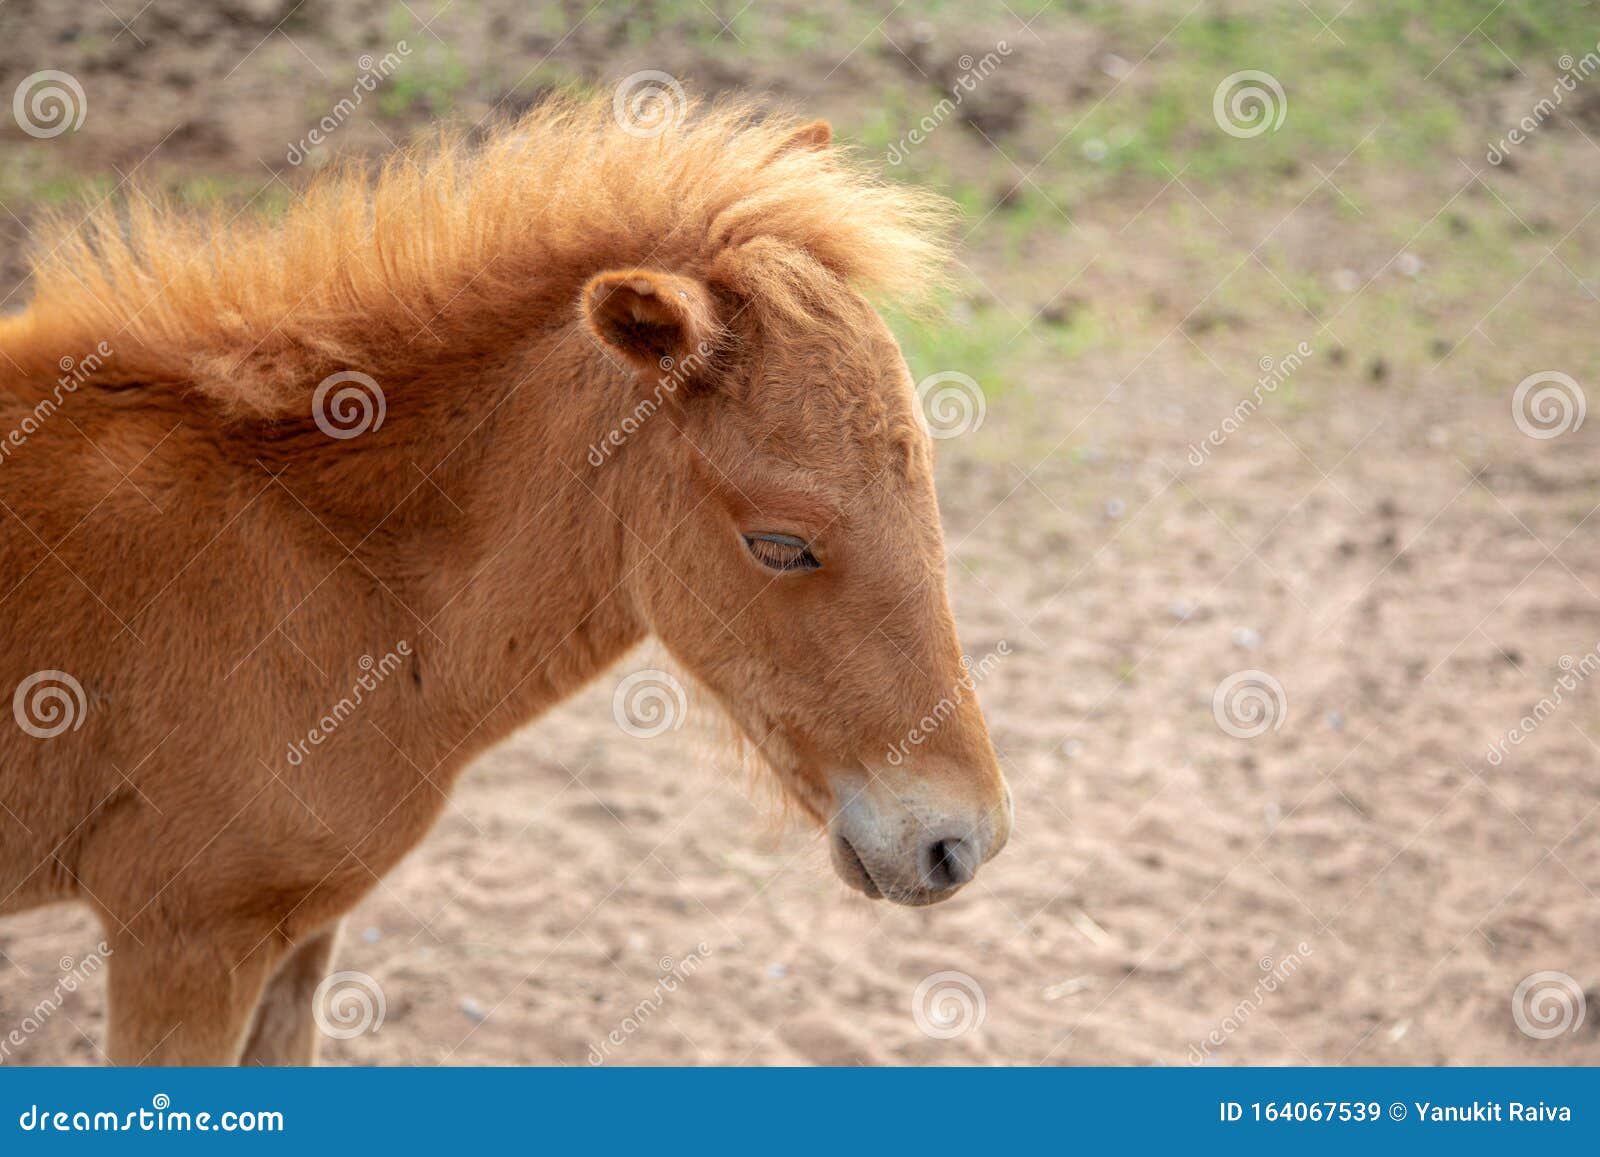 Beautyful Long Hair Horse on Farm Stock Image - Image of fast, hair:  164067539